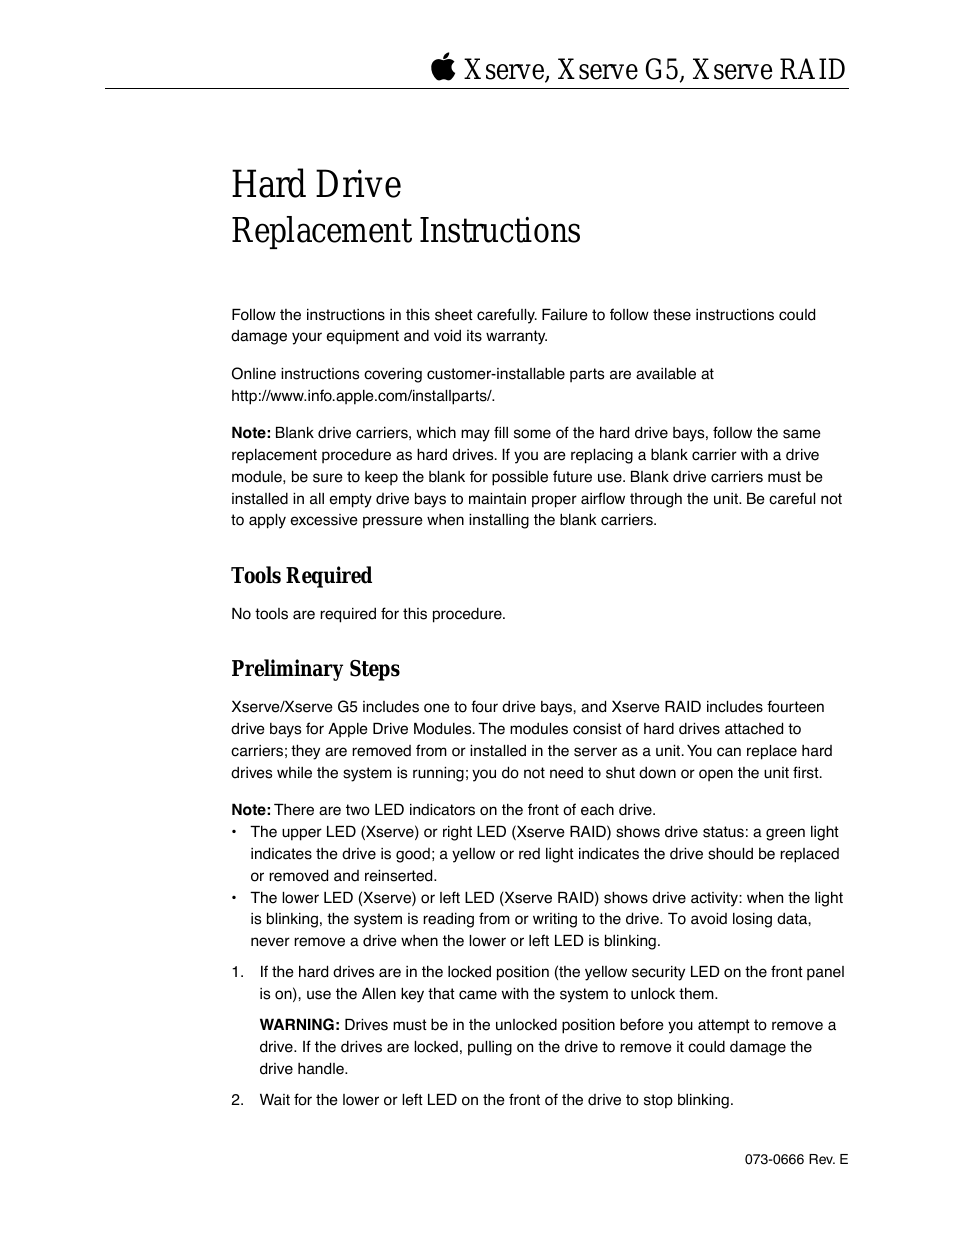 Xserve RAID (Hard Drive Replacement)